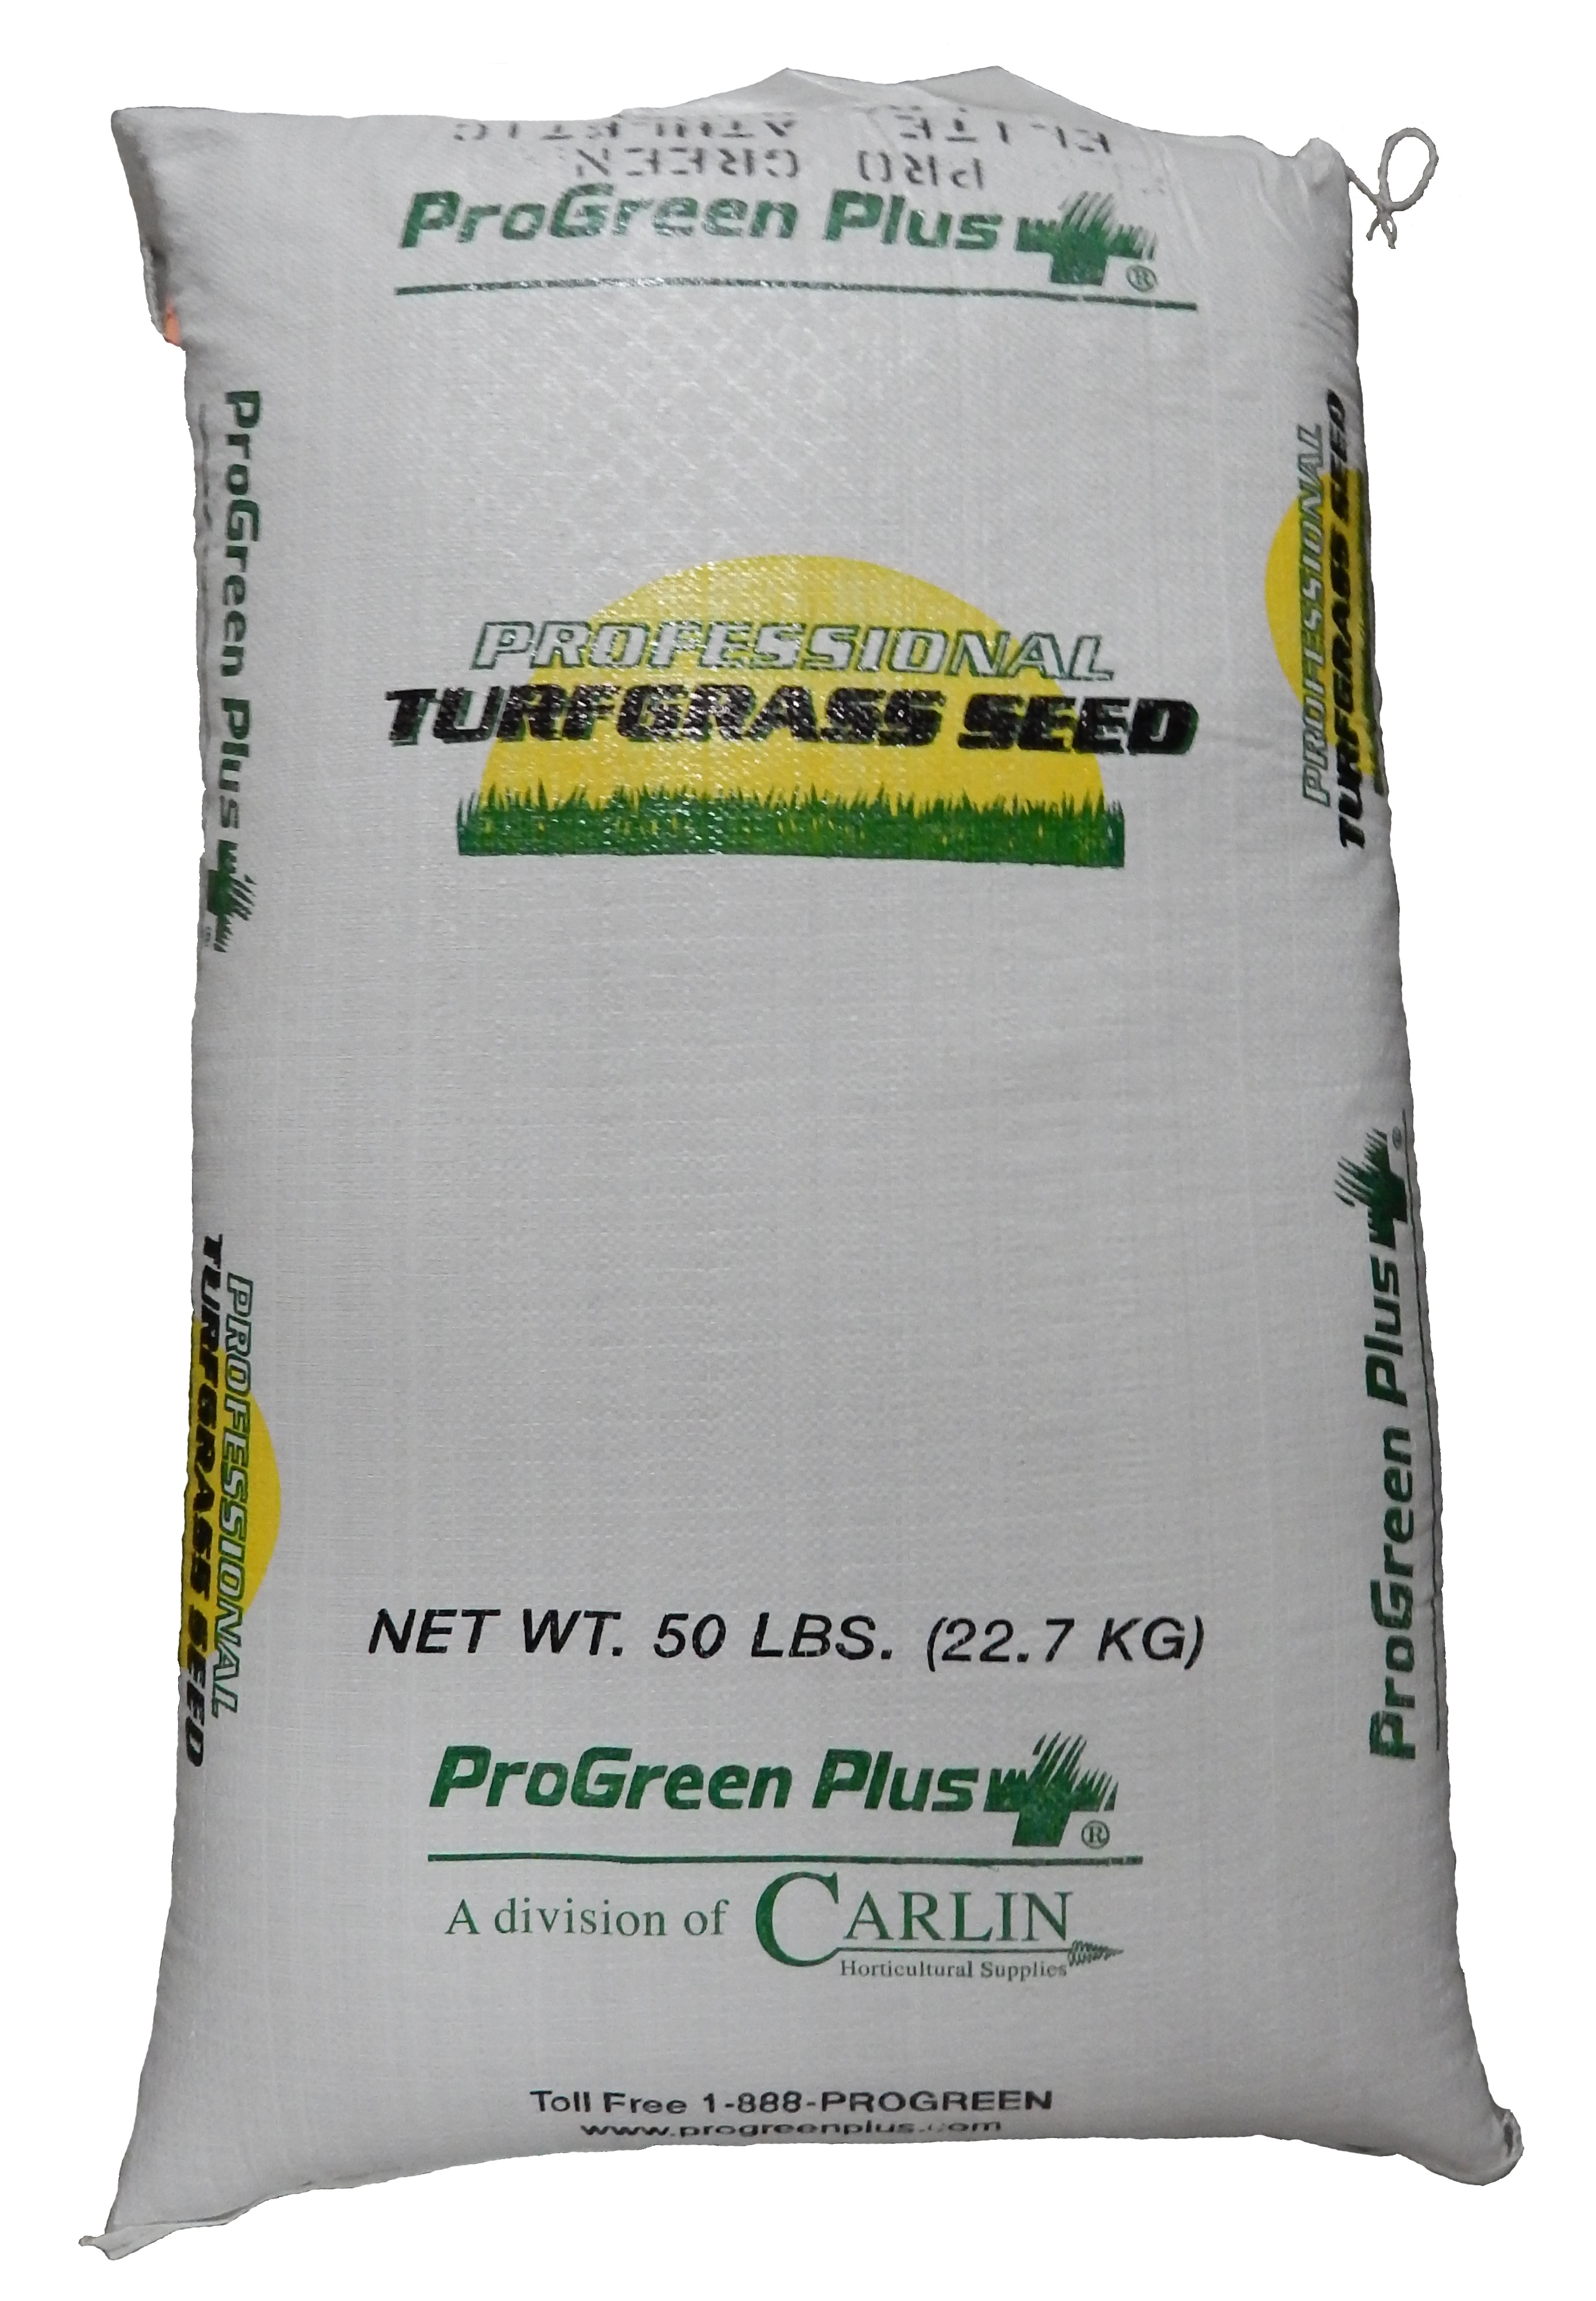 ProGreen Elite Athletic Coated Mix 50lb Bag - Turfgrass Seed